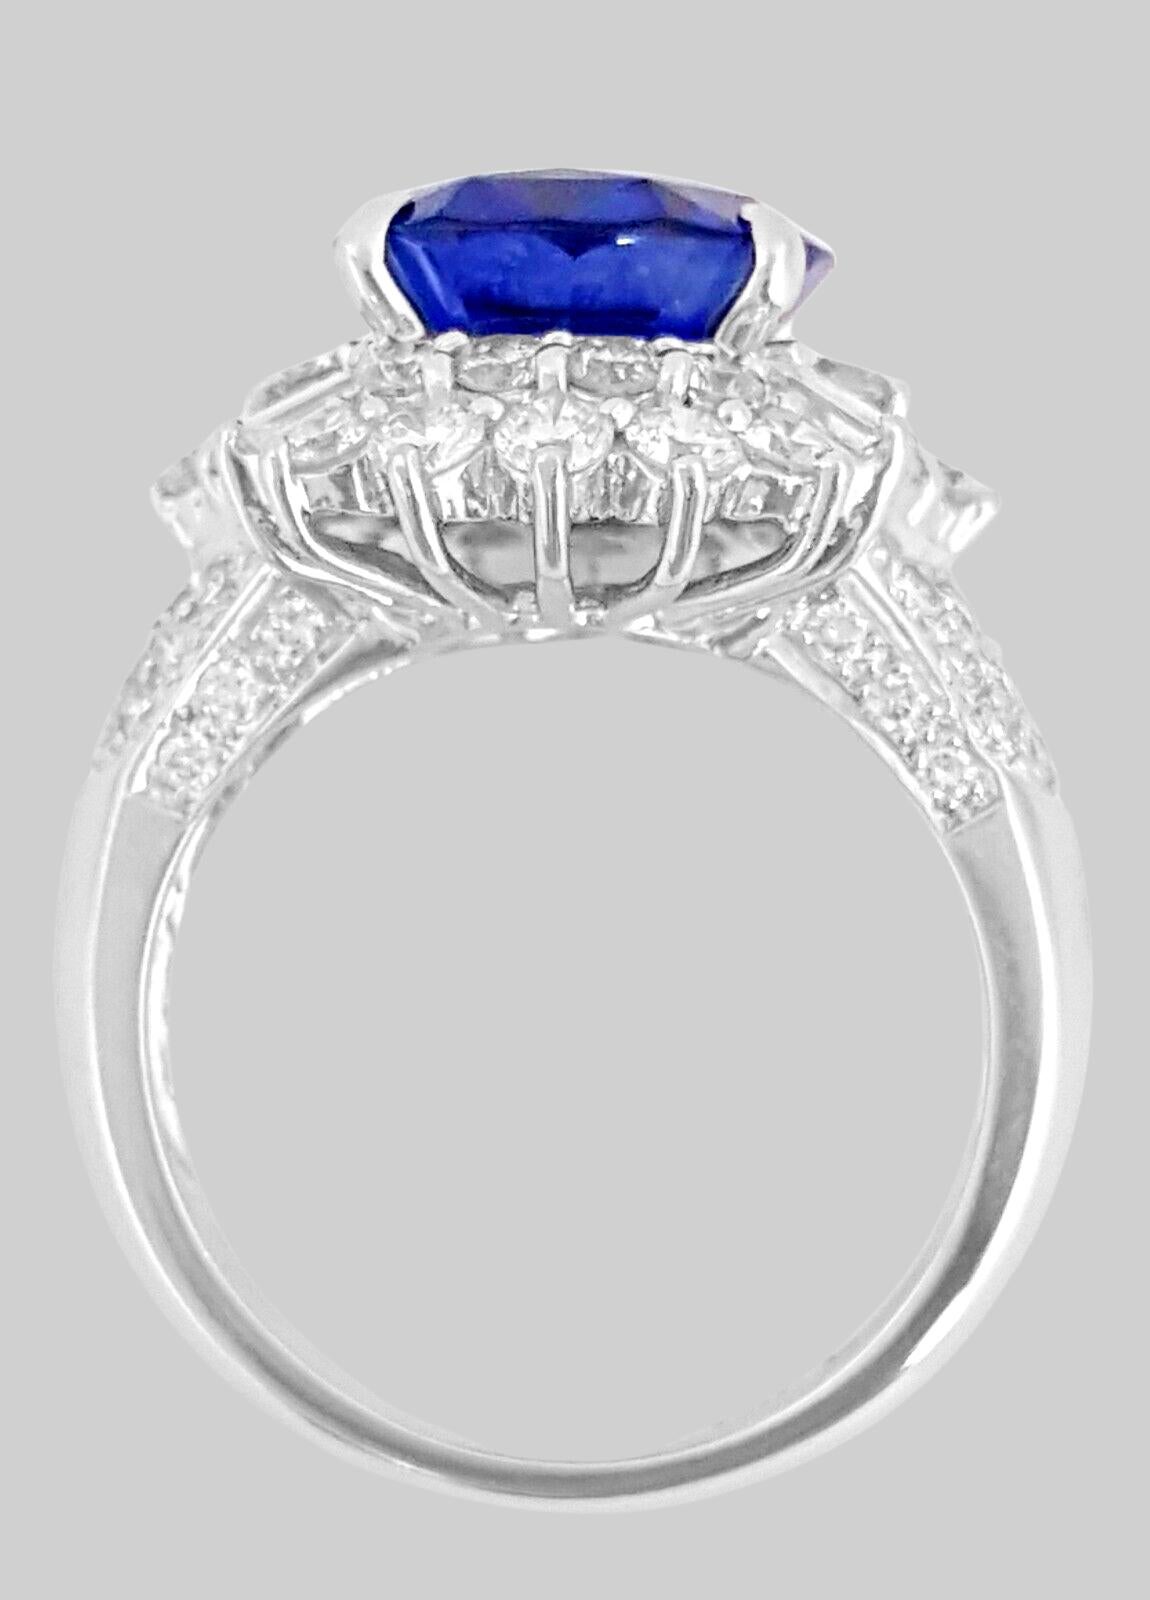 blue diamond price per carat